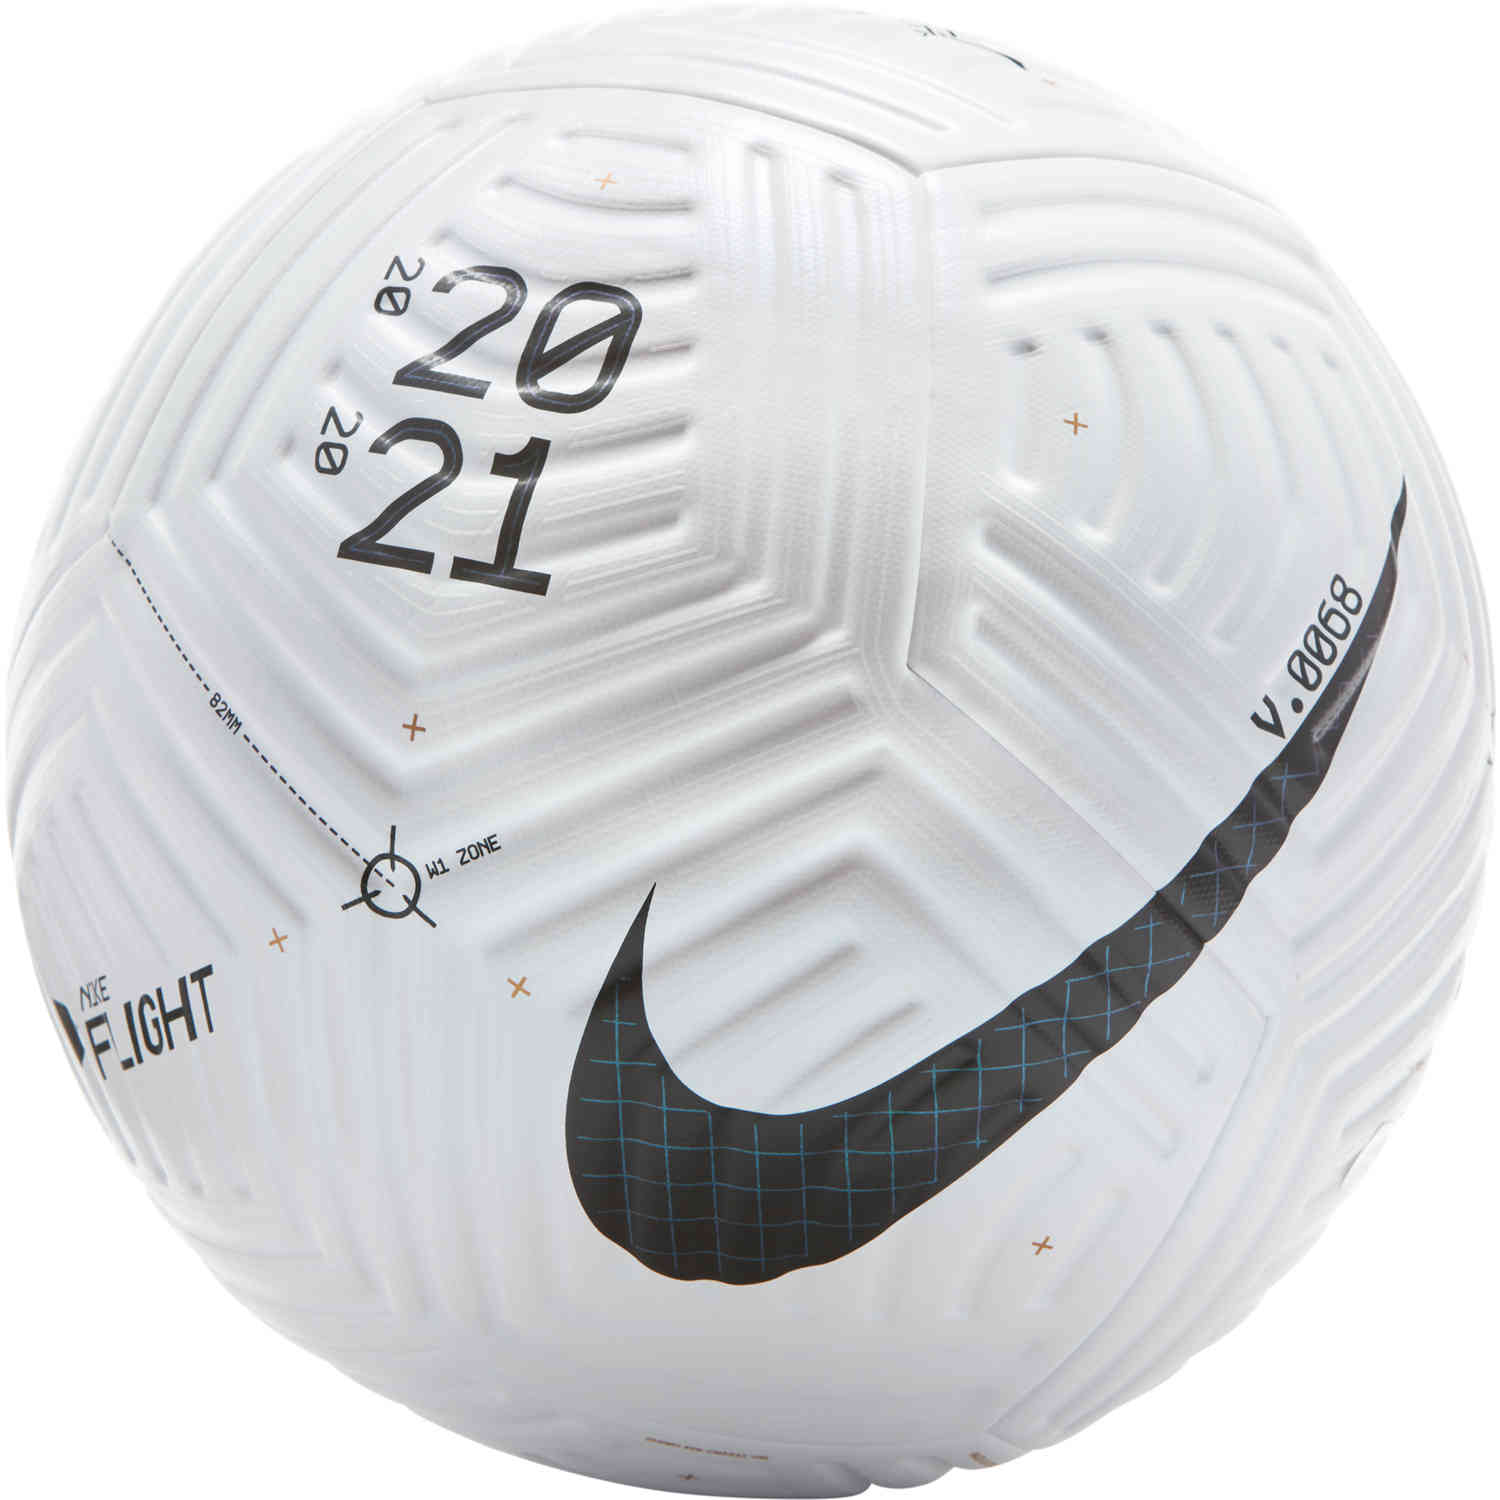 Nike Flight Premium Match Soccer Ball 